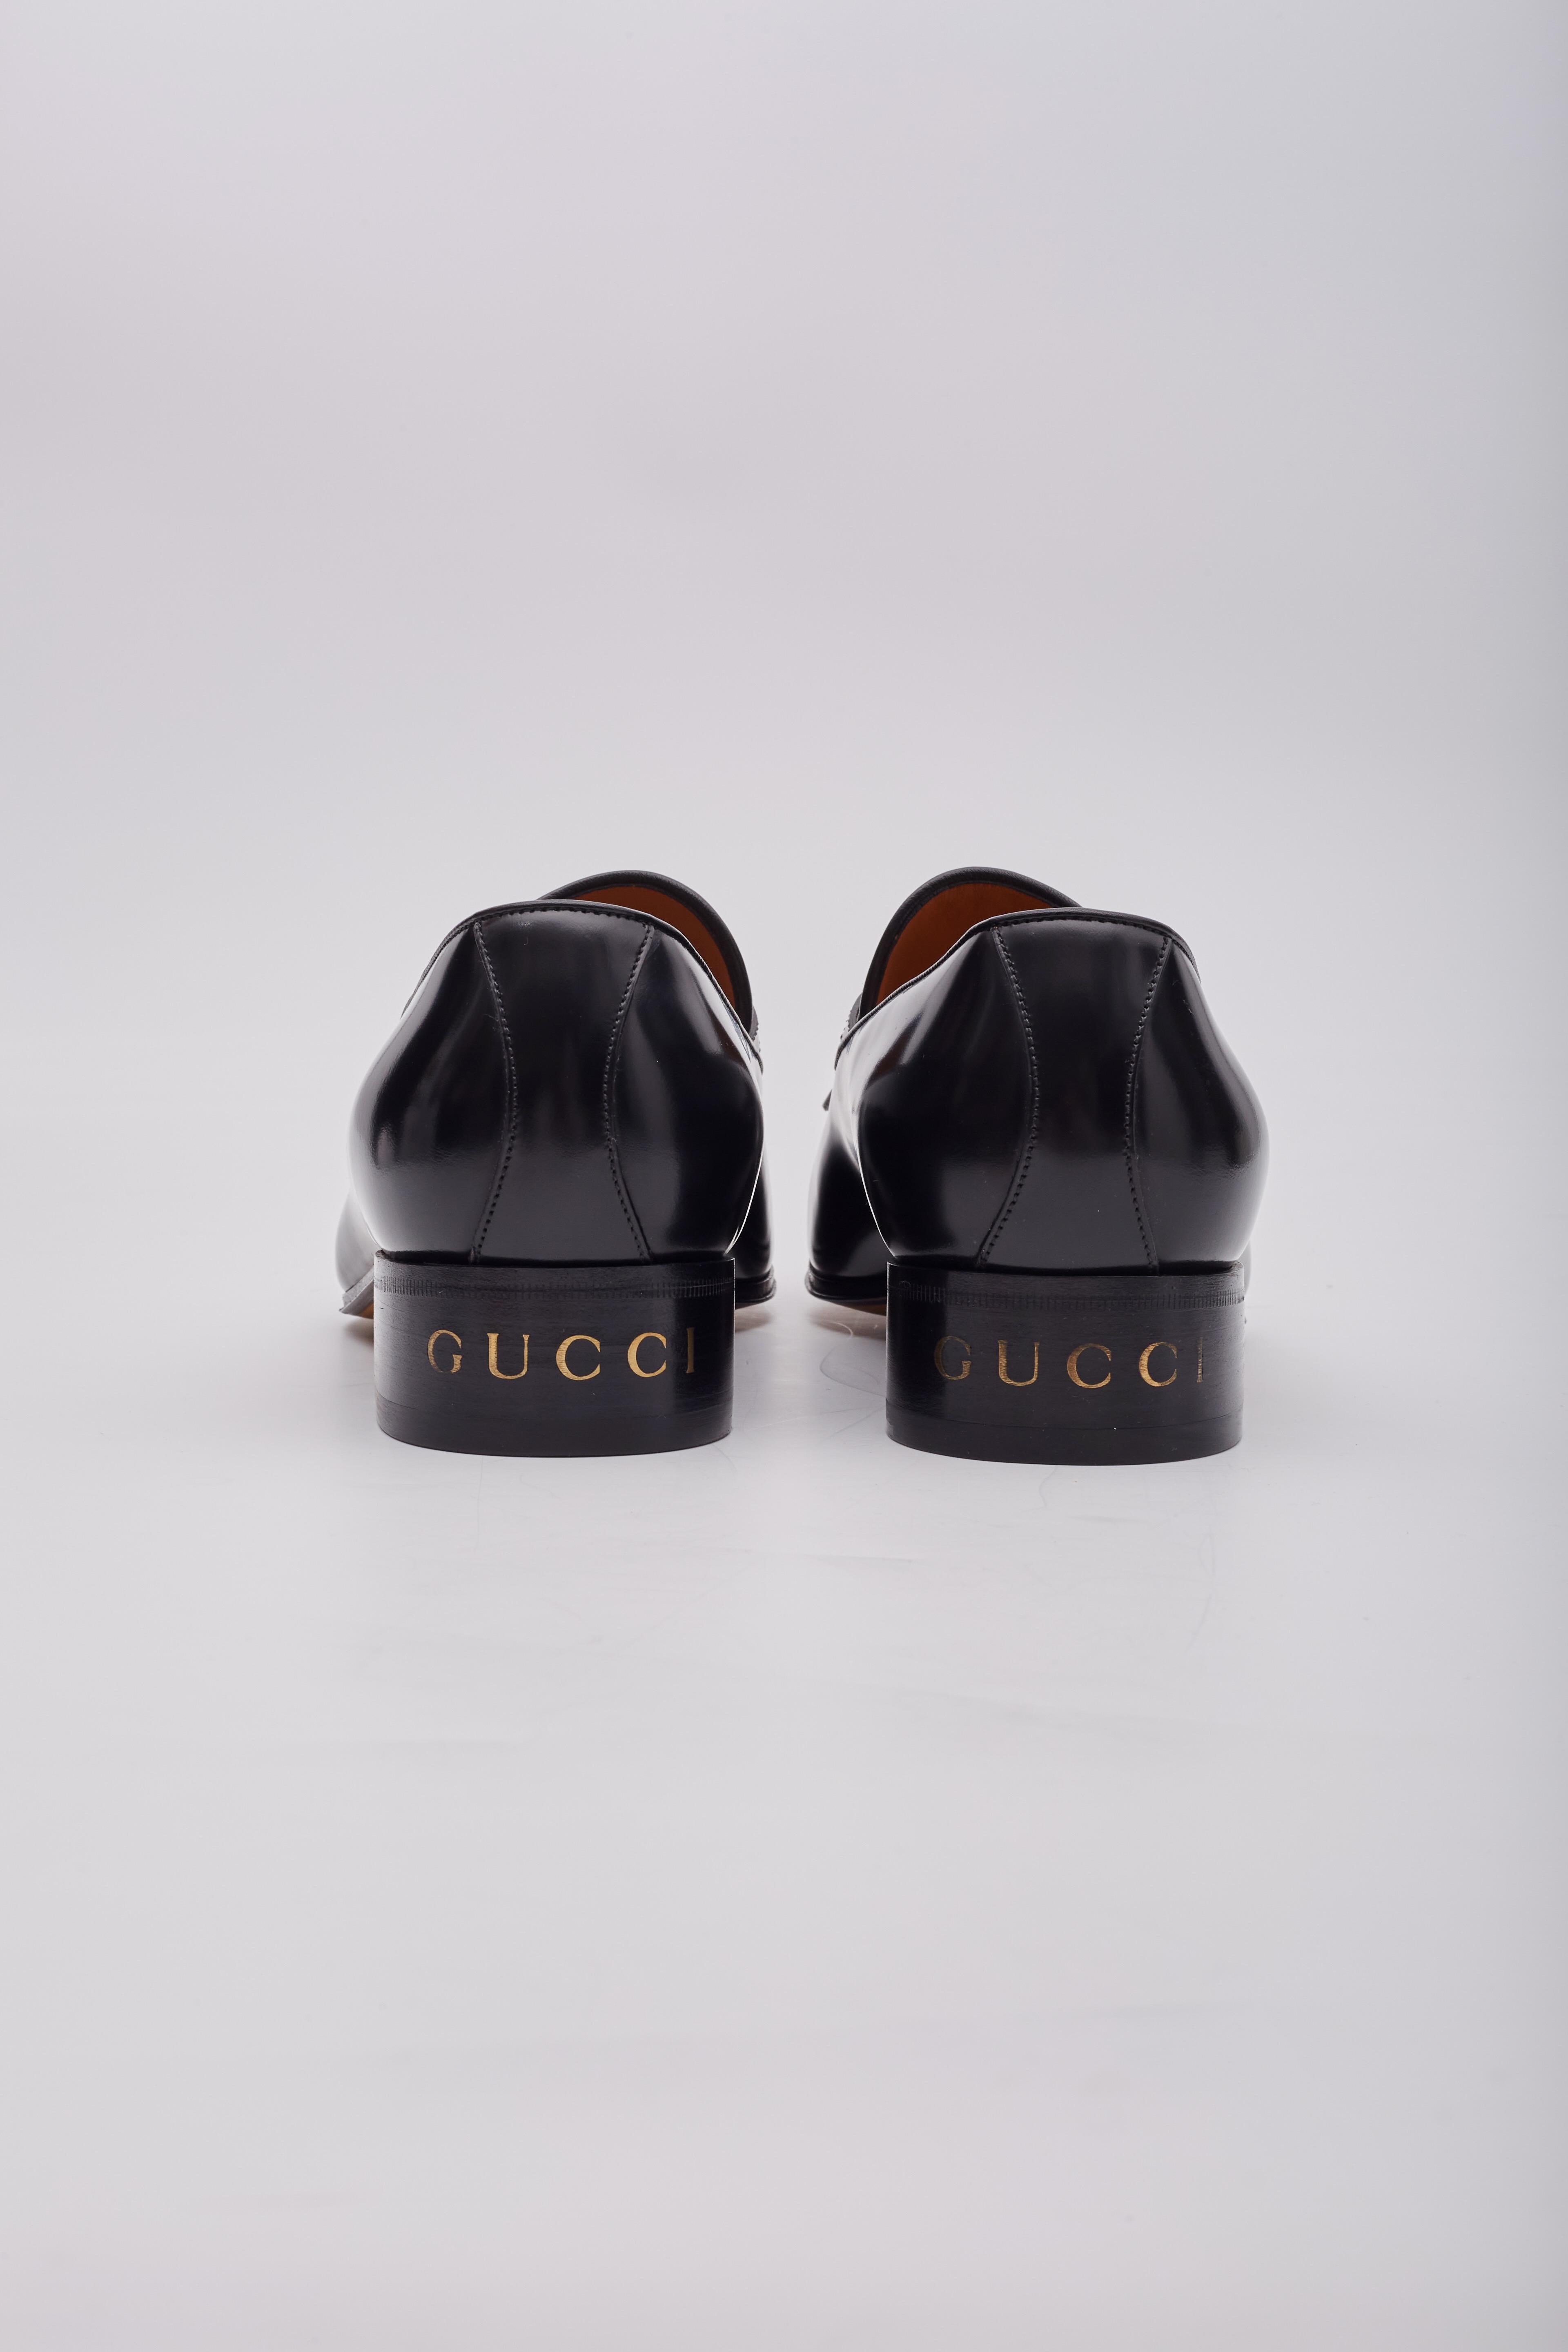 Gucci Leather Black Tassel Loafers Mens (US 11) Excellent état - En vente à Montreal, Quebec